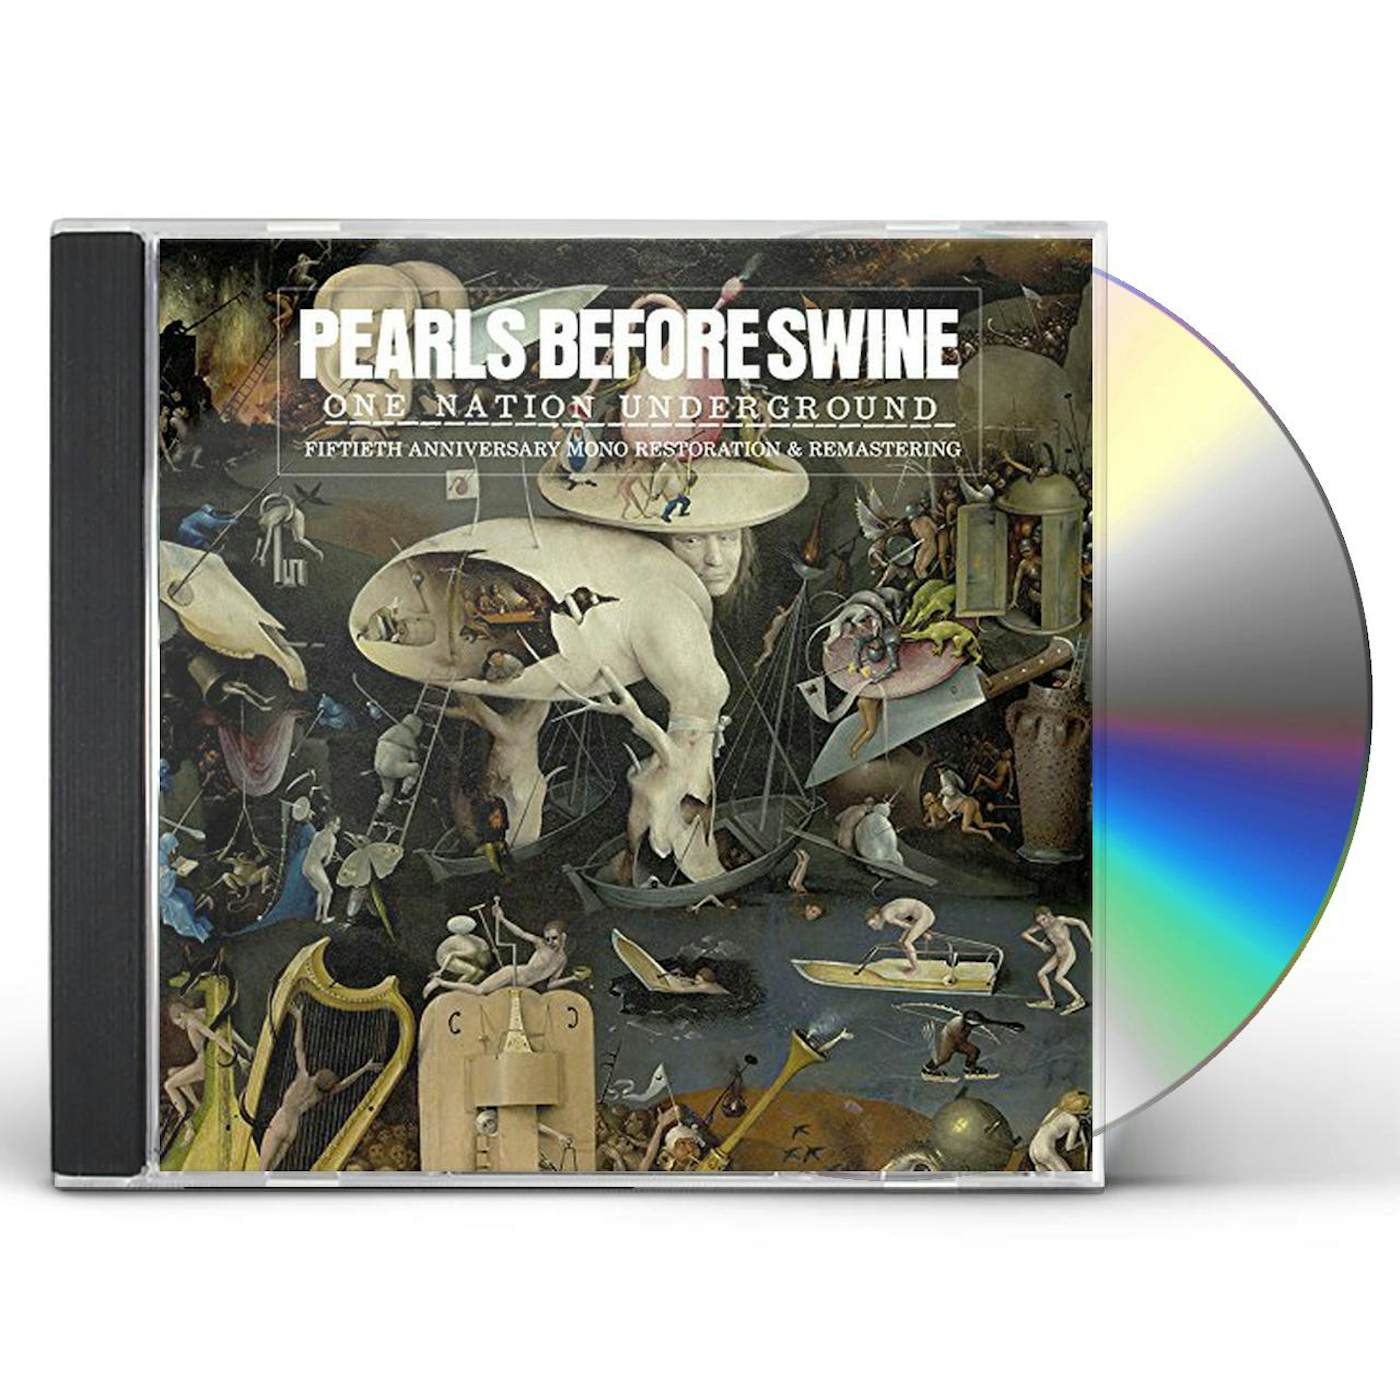 Pearls Before Swine ONE NATION UNDERGROUND CD